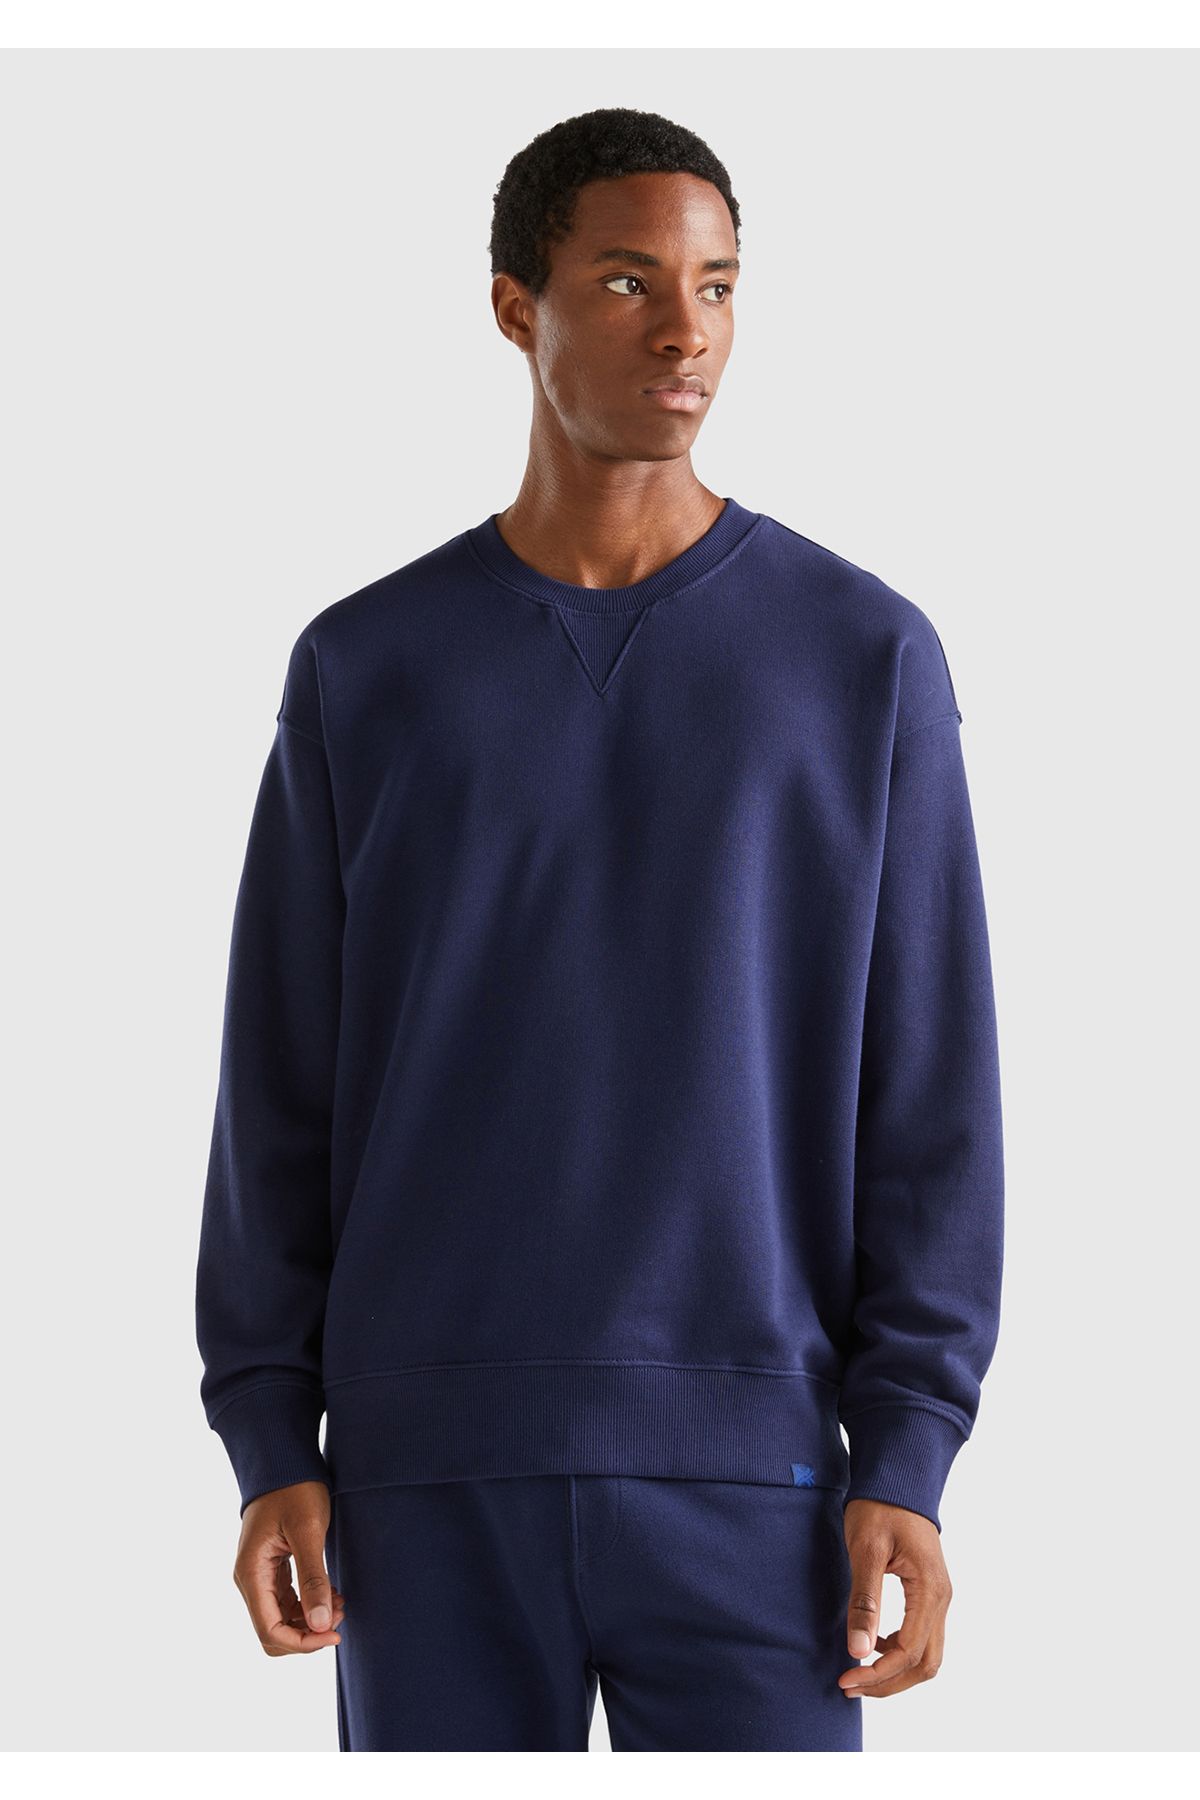 United Colors of Benetton Erkek Lacivert %100 Koton Bisiklet Yaka Basic Sweatshirt Lacivert